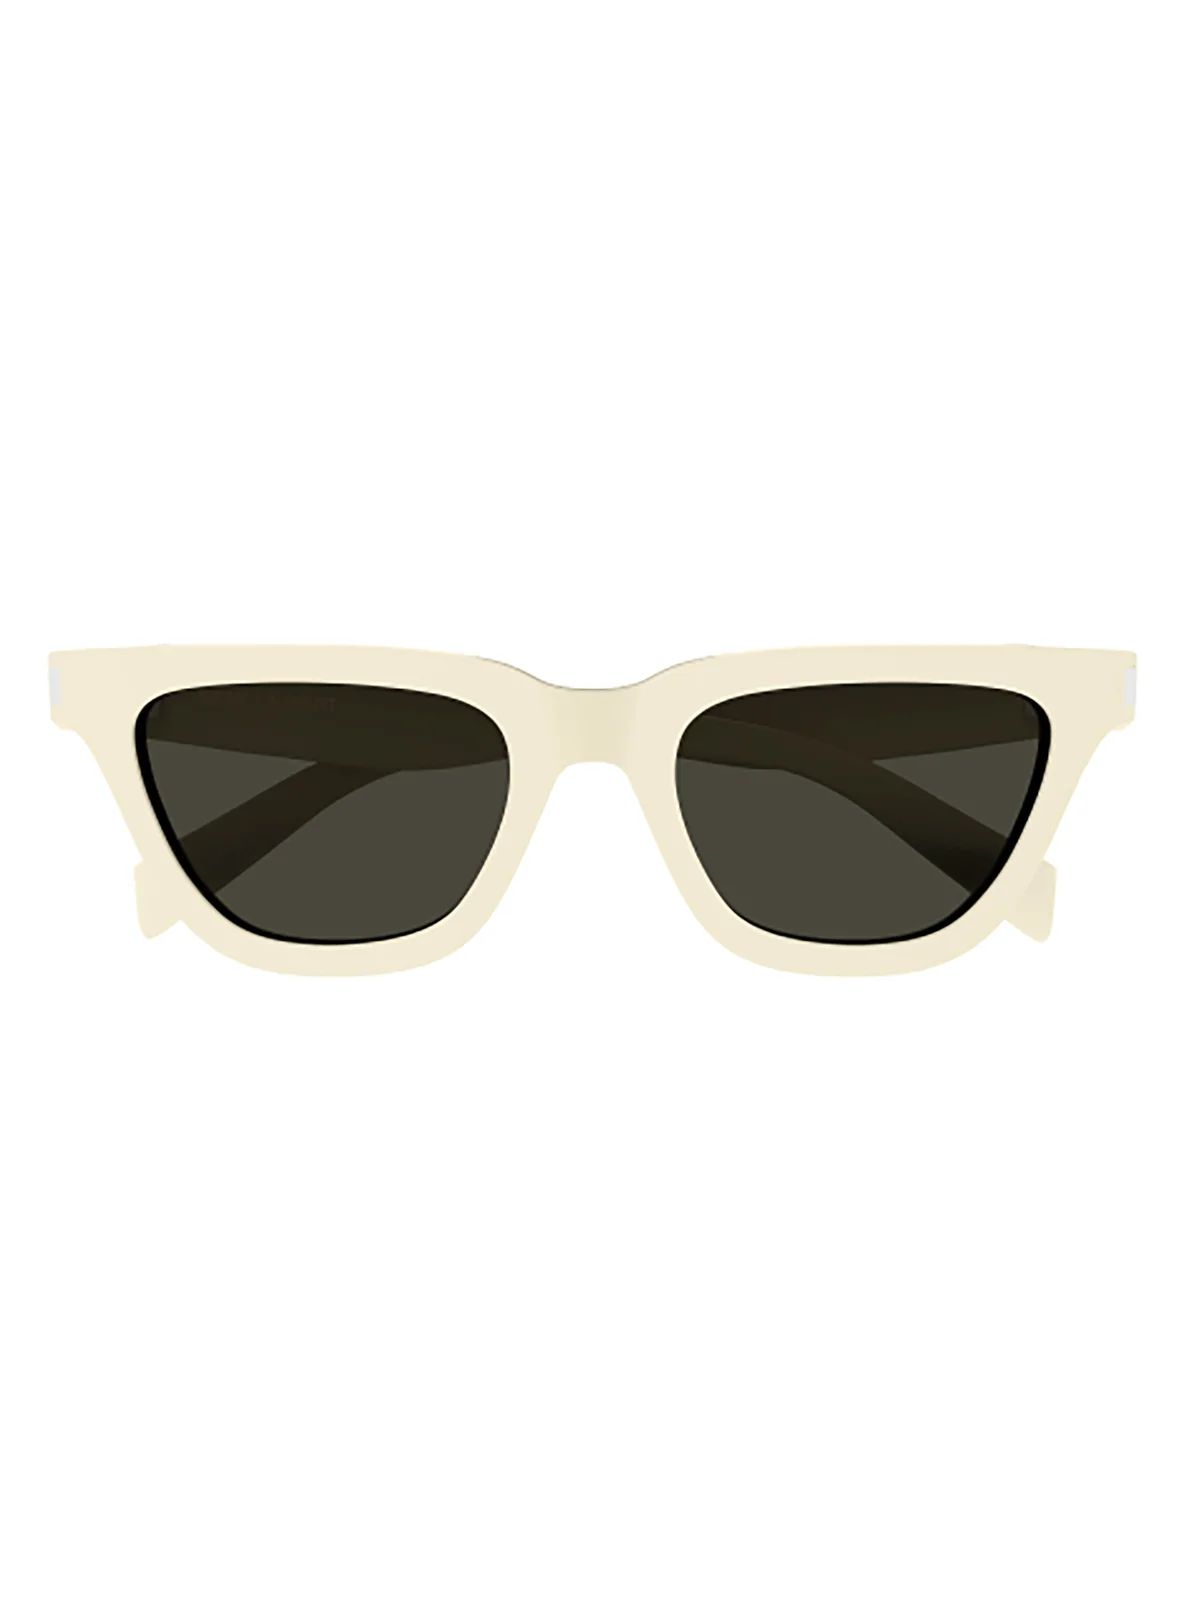 Saint Laurent Eyewear SL 462 Square Frame Sunglasses | Cettire Global